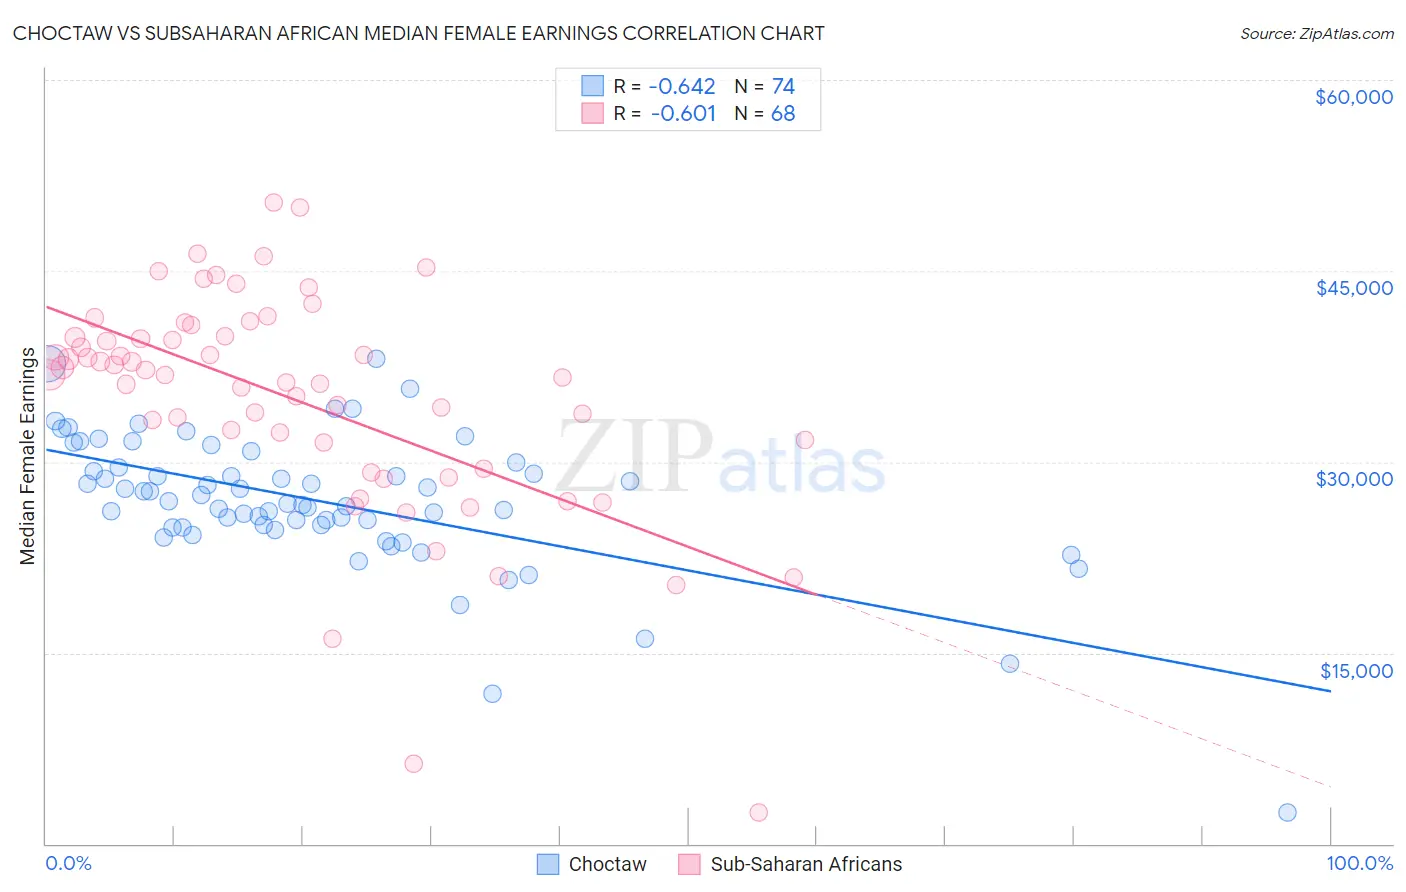 Choctaw vs Subsaharan African Median Female Earnings